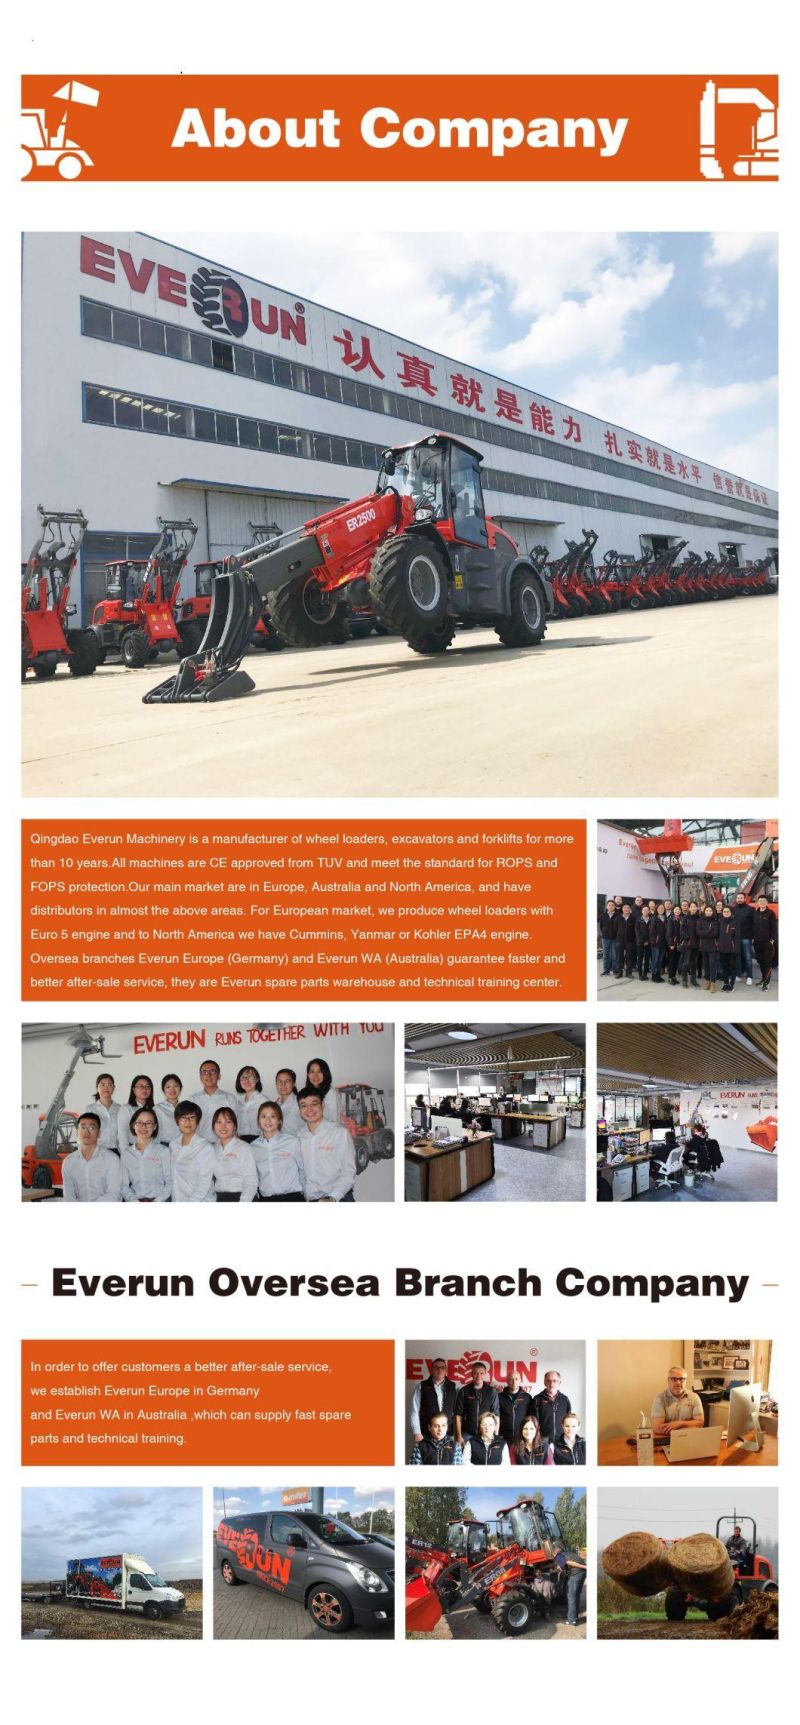 Everun ERDF20 2ton China Manufacturer Hydraulic Transmission Small Diesel Forklift